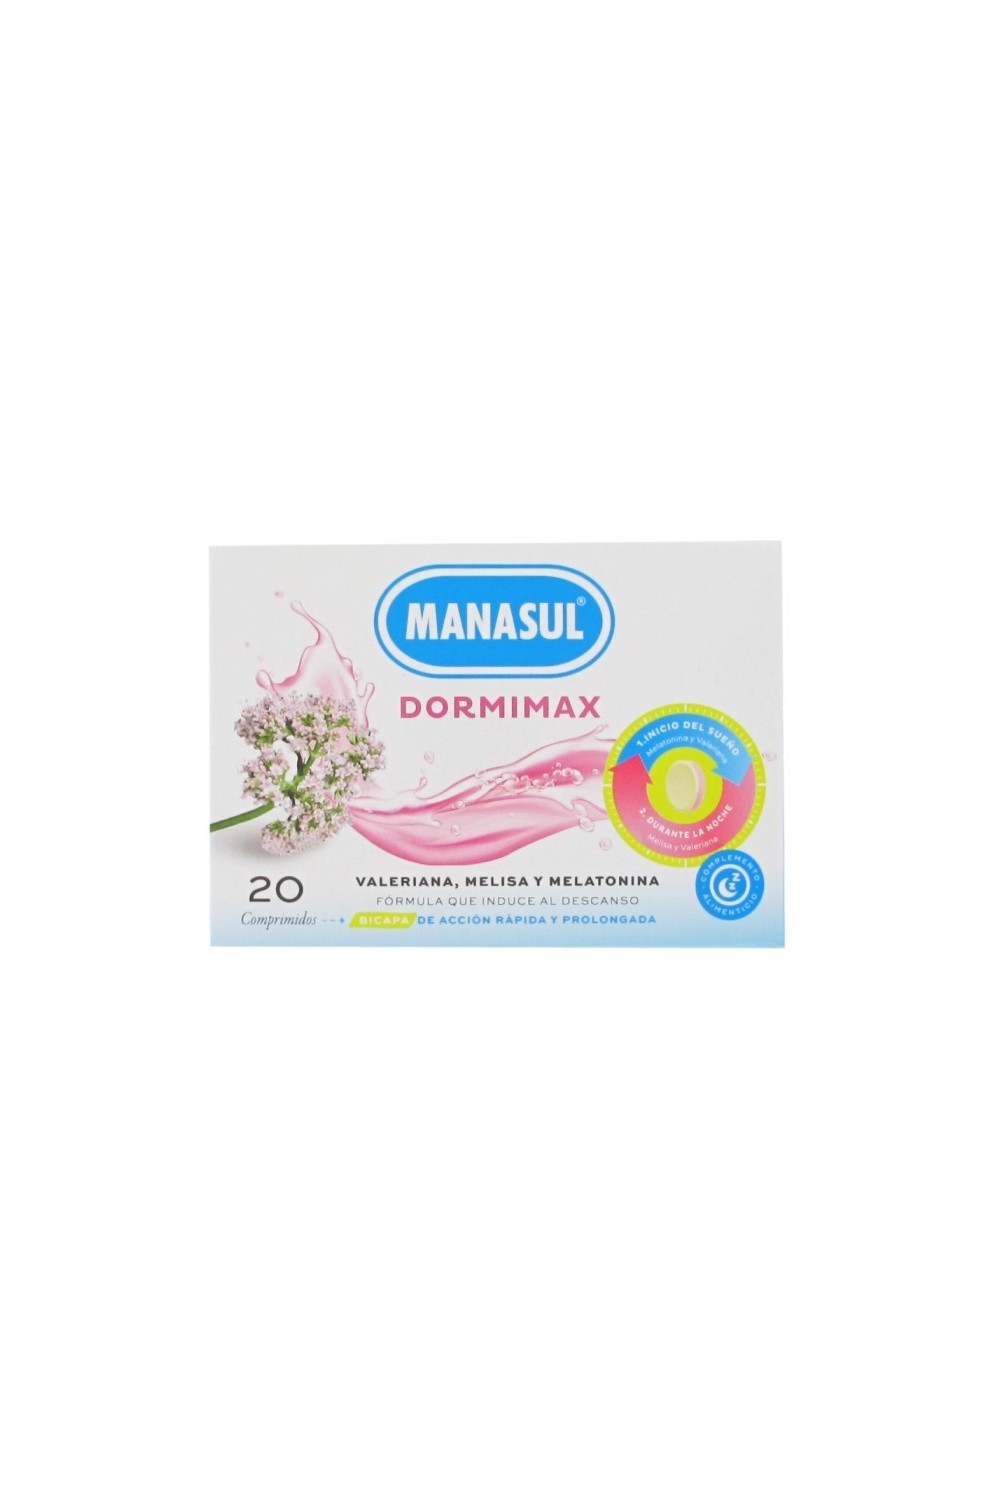 Manasul Dormimax 20 Tablets